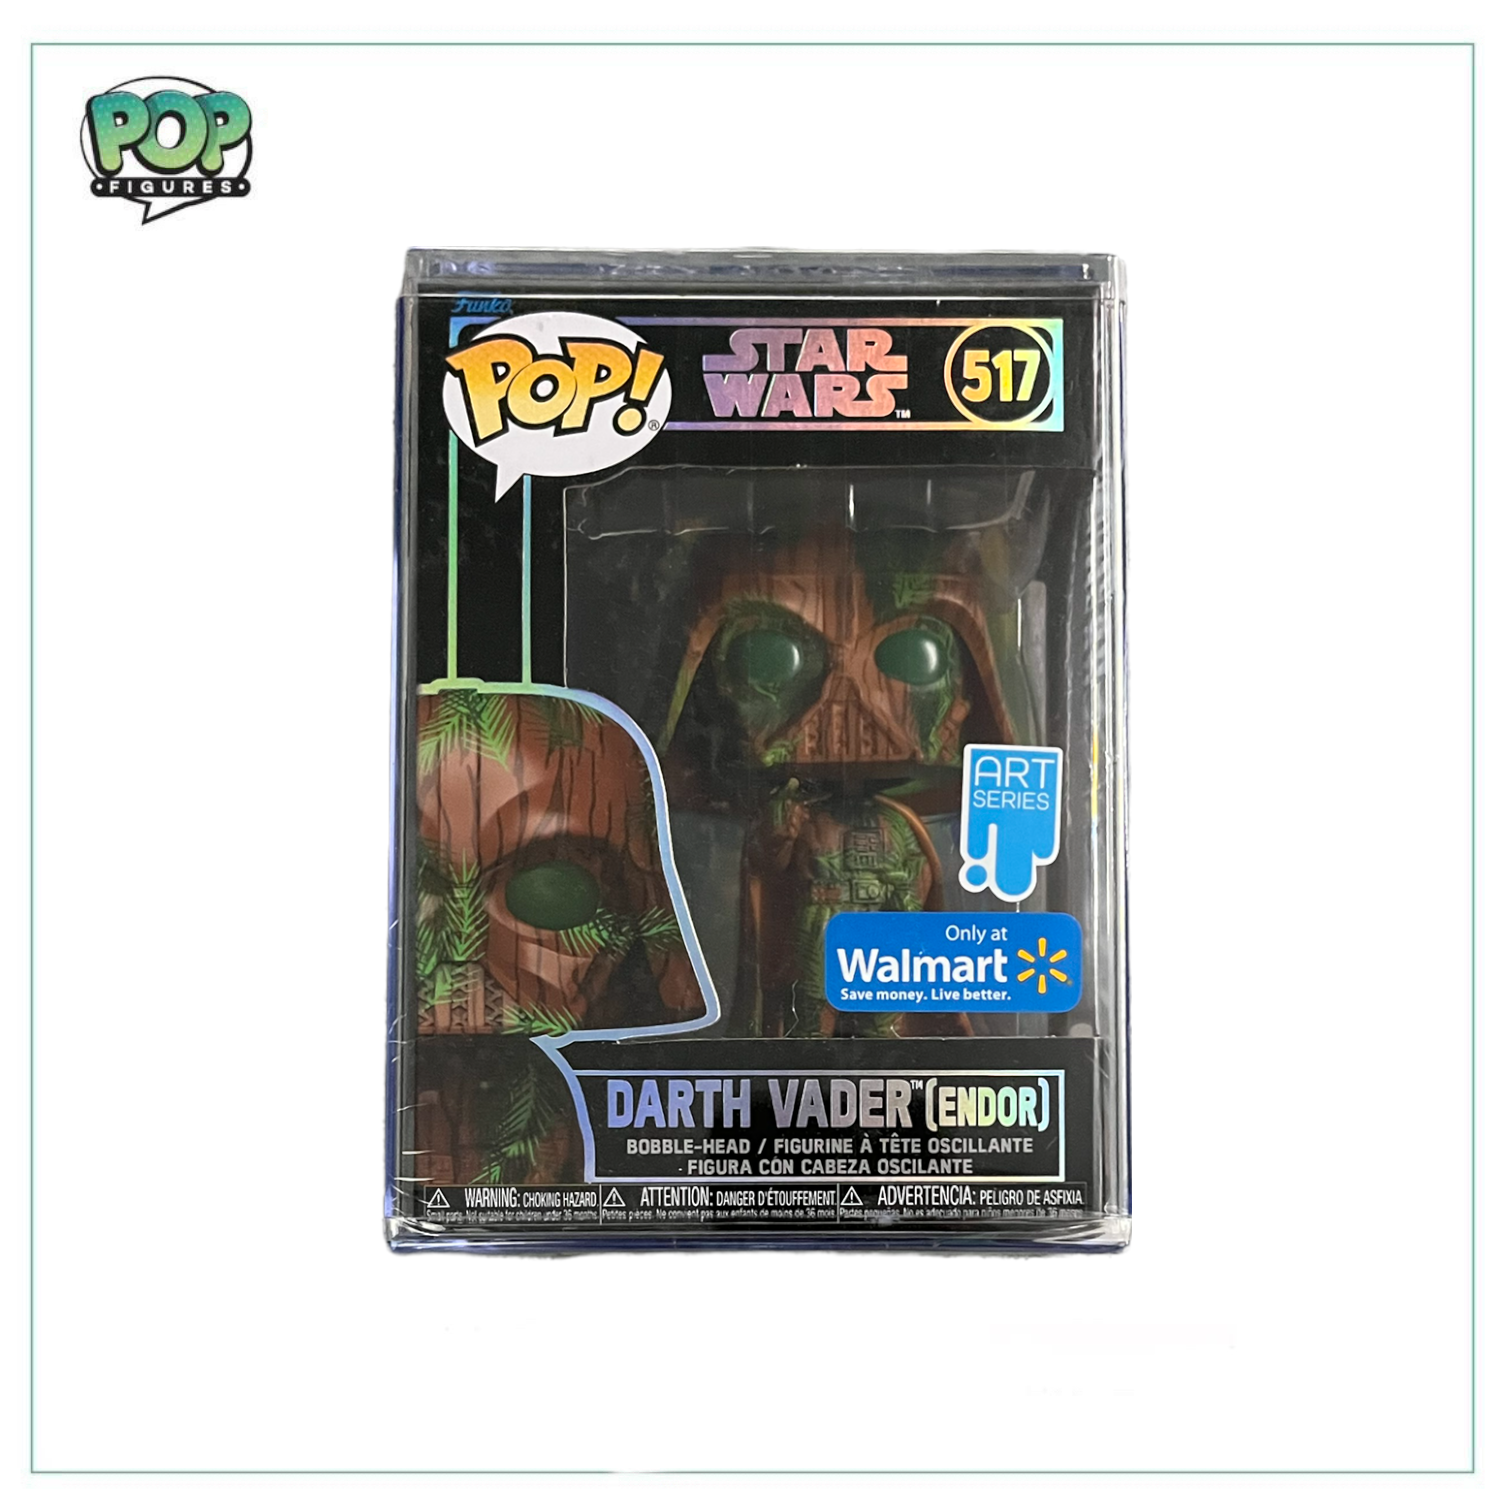 Darth Vader (Endor) Art Series #517 Funko Pop! Star Wars - Walmart Exclusive - Angry Cat